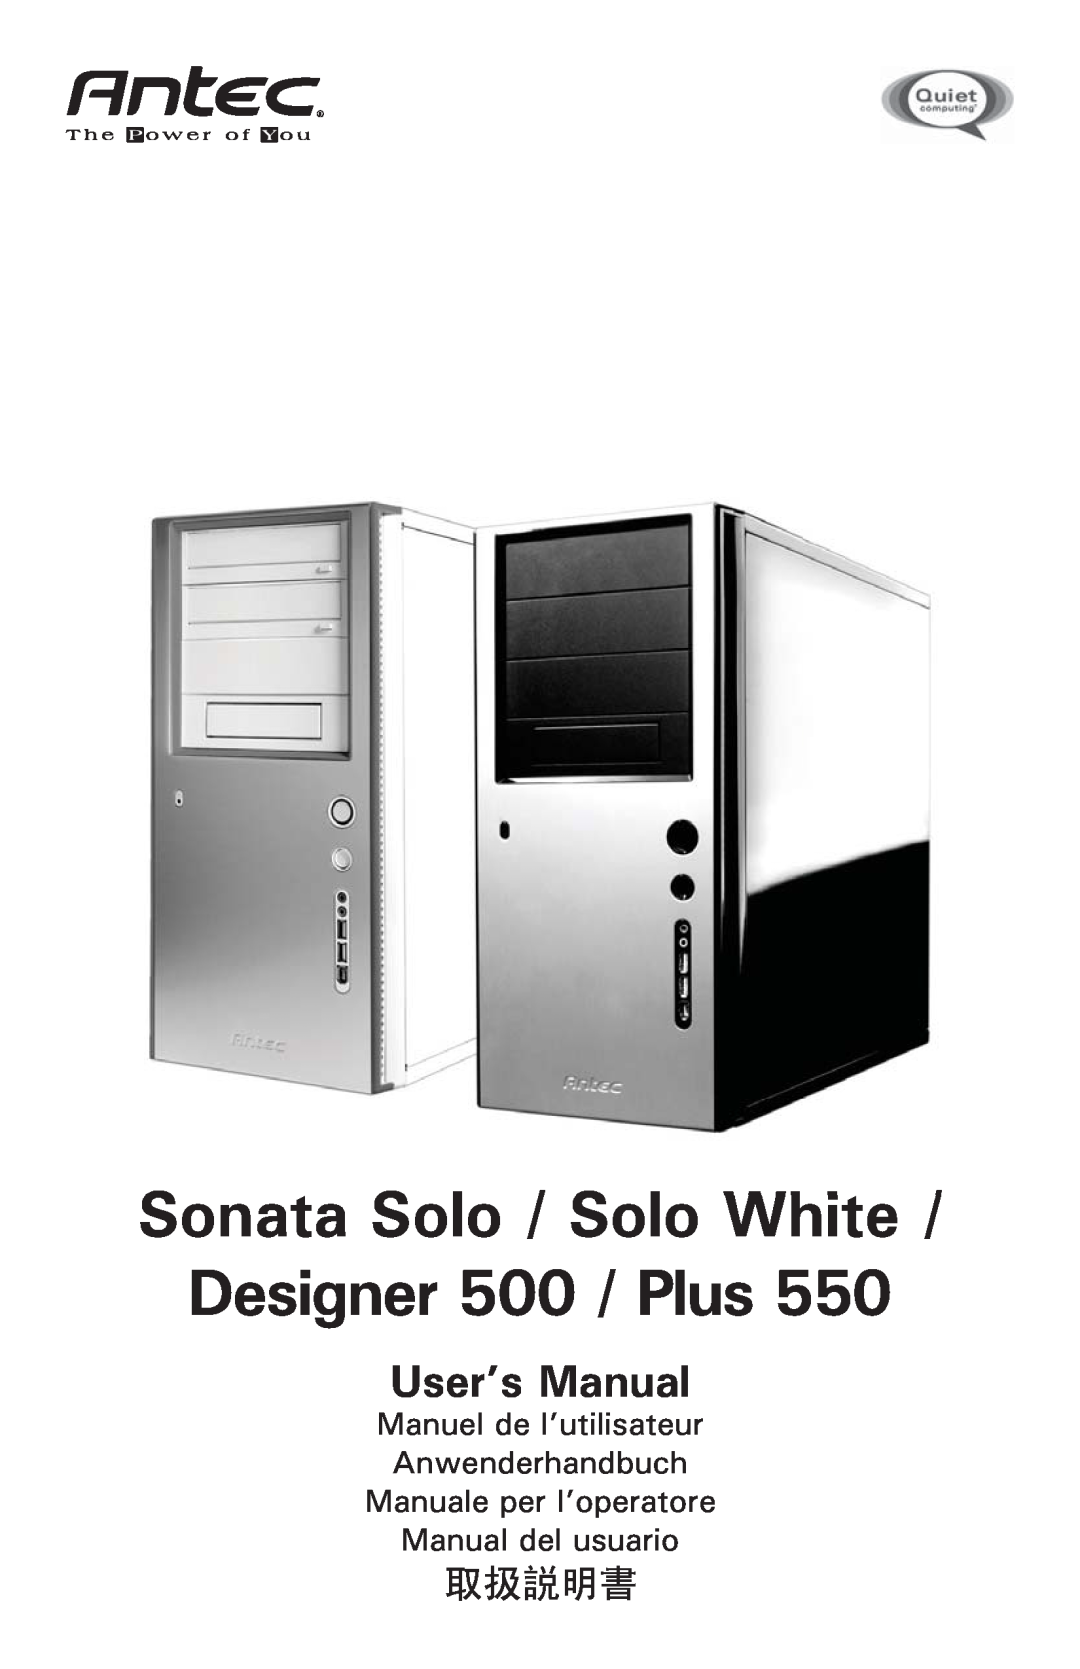 Antec Plus 550 user manual Sonata Solo / Solo White Designer 500 / Plus, User’s Manual, Manual del usuario 